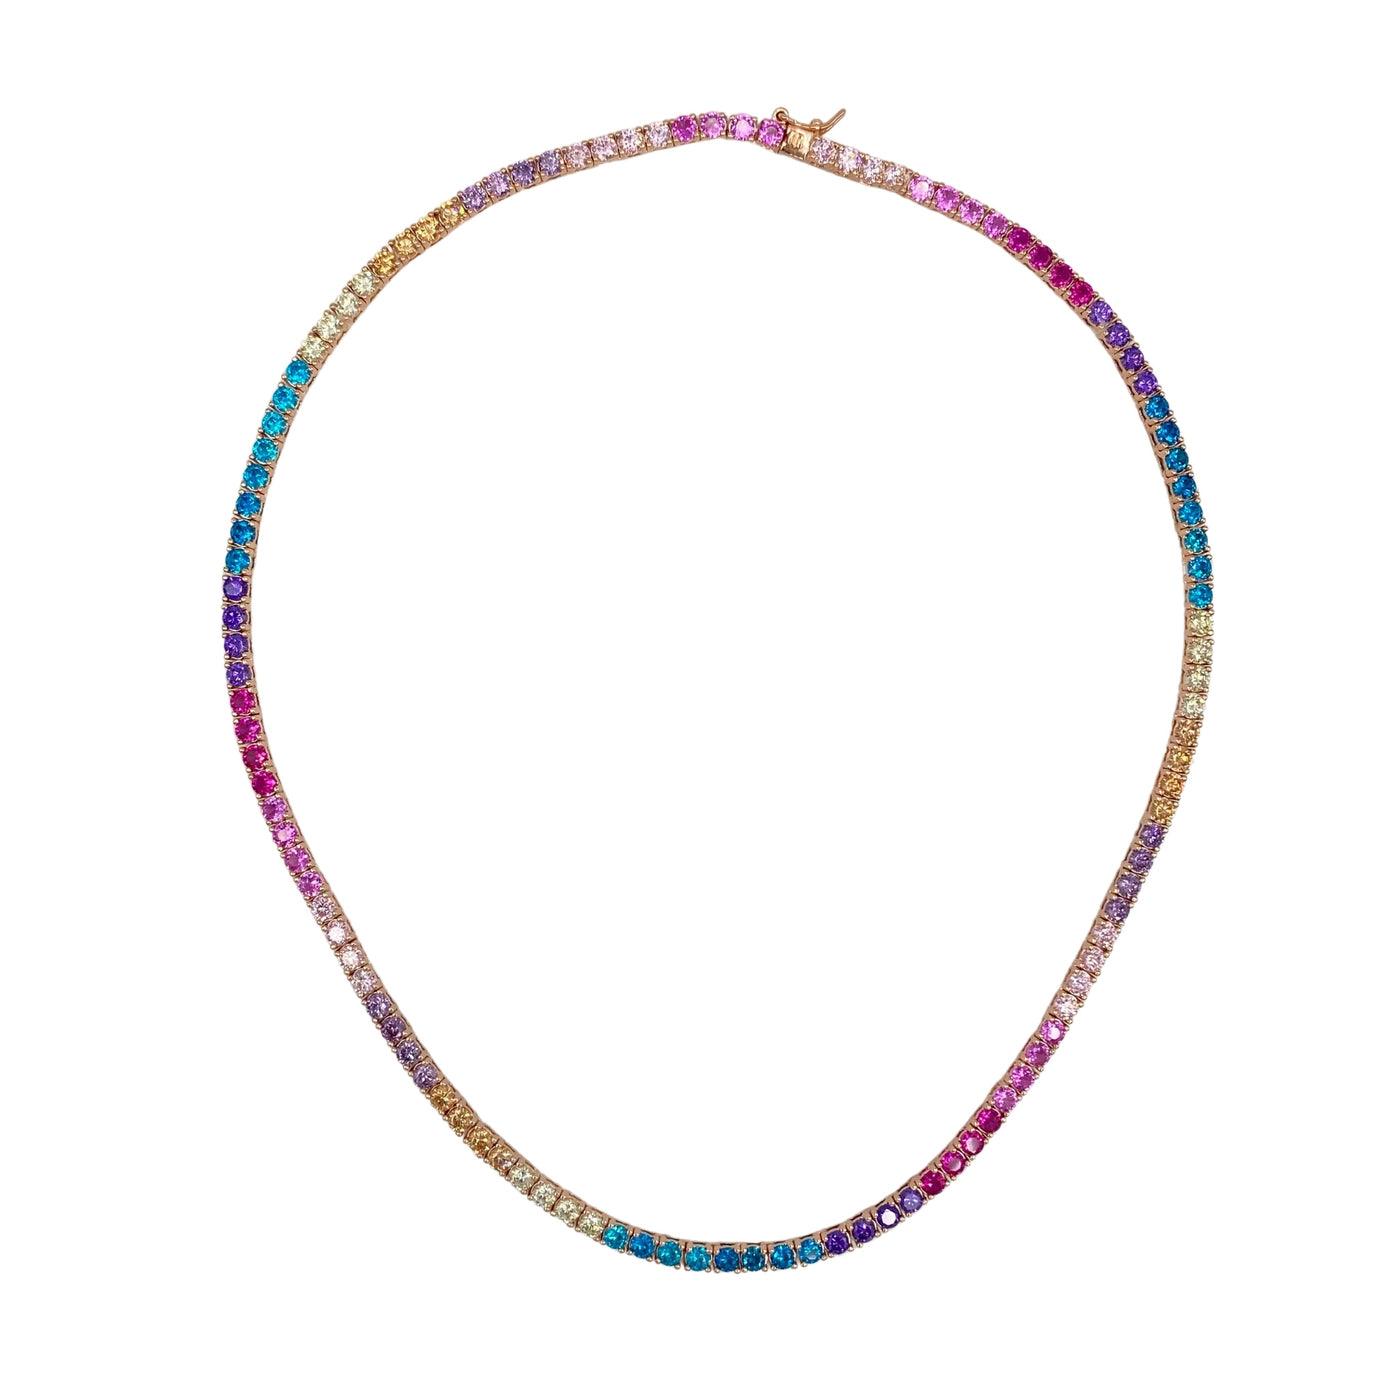 Silver rainbow tennis necklace - 3 mm